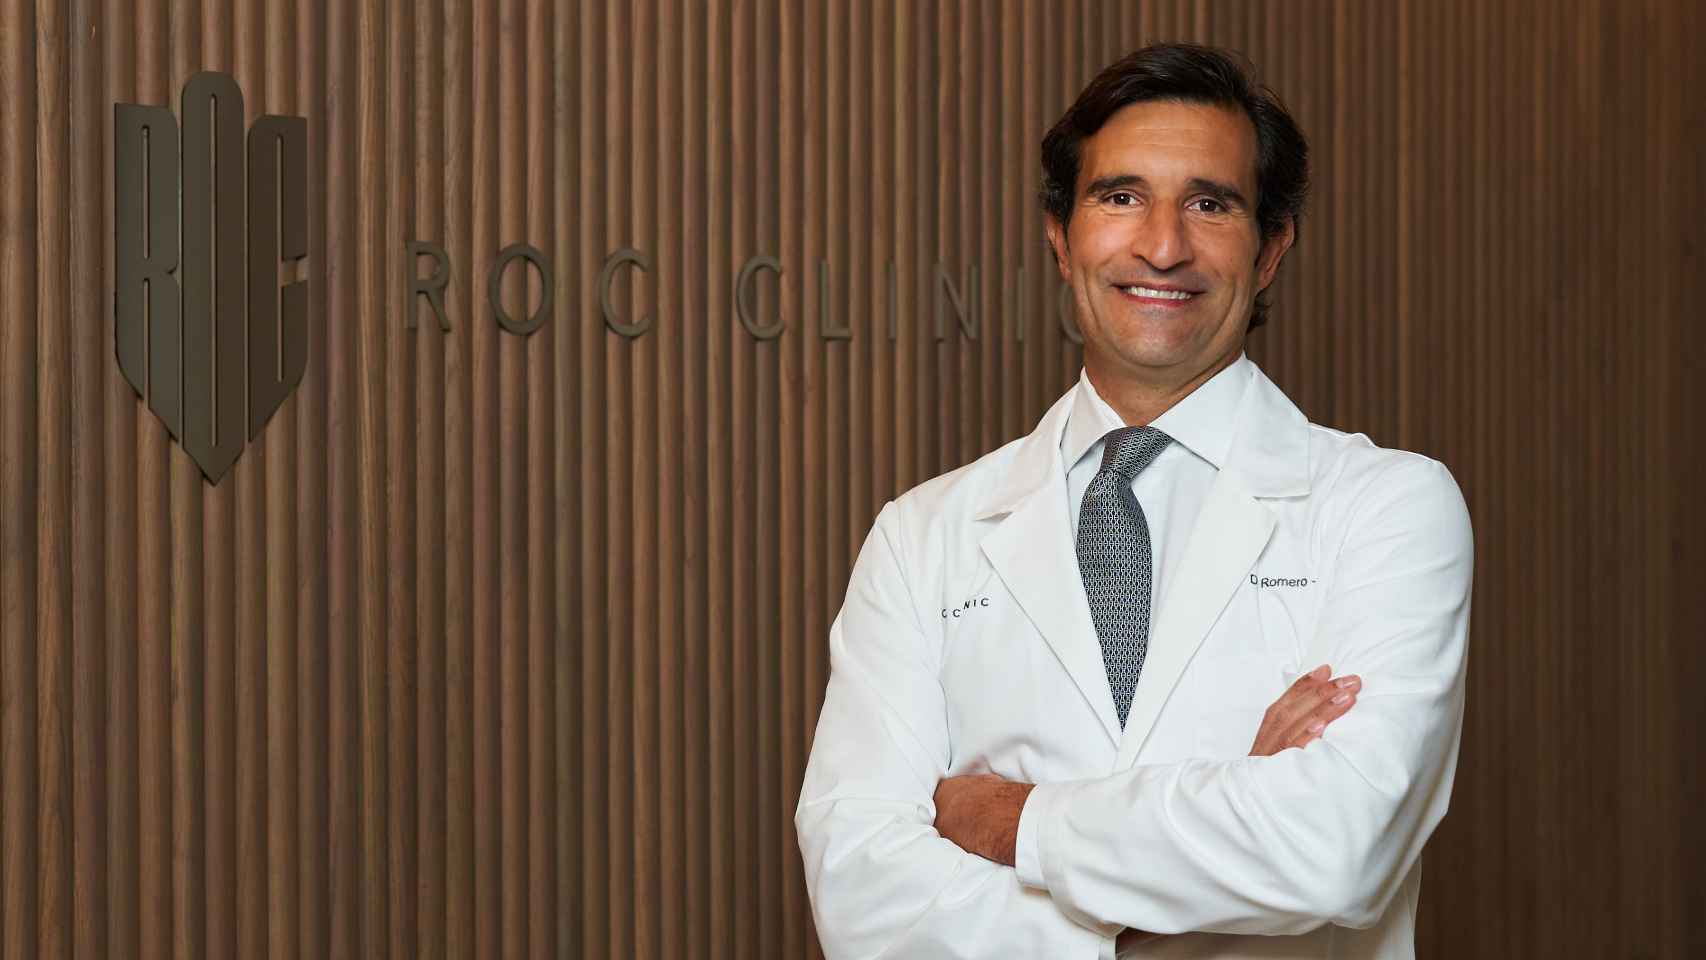 El doctor Javier Romero-Otero.